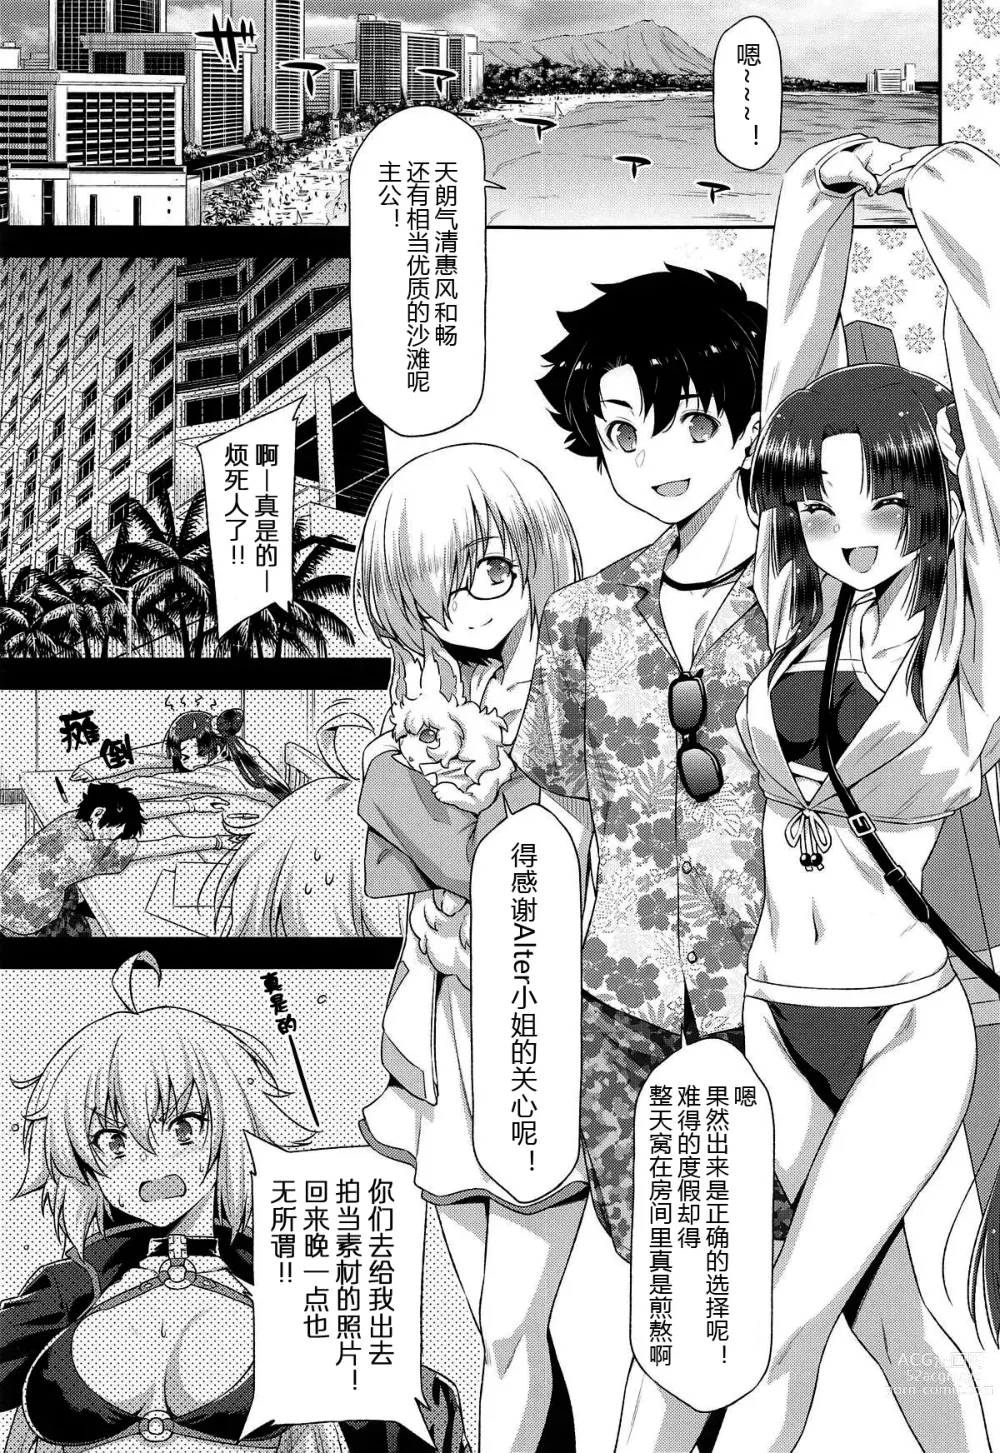 Page 5 of doujinshi Ushiwaka to Luluhawa